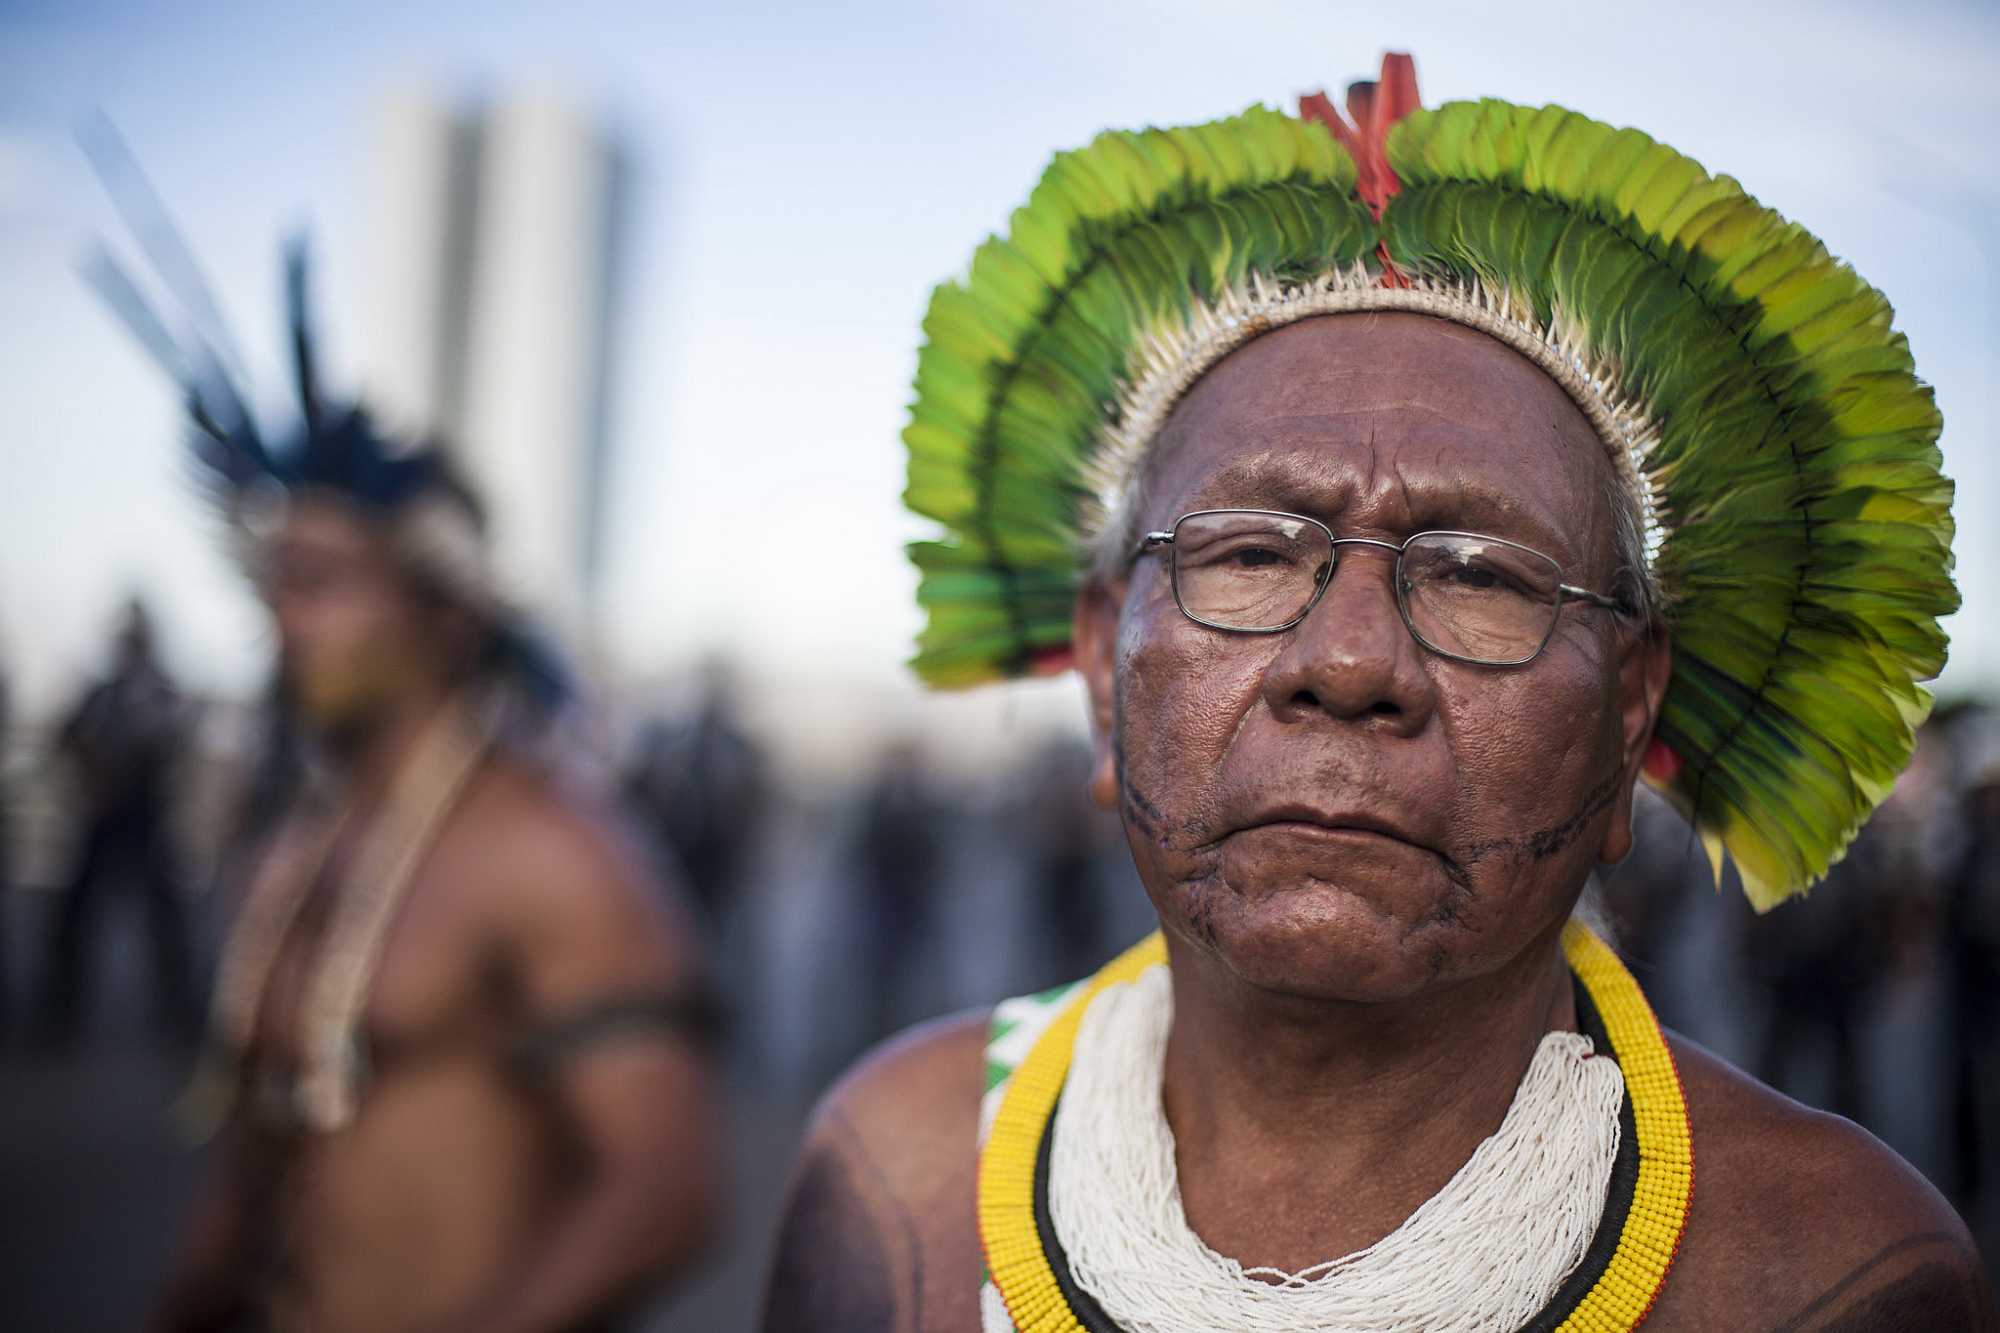 Brazilian Indian chief, Paulinho Paiakan, dies victim of Covid 19 - Photo: Mídia Ninja